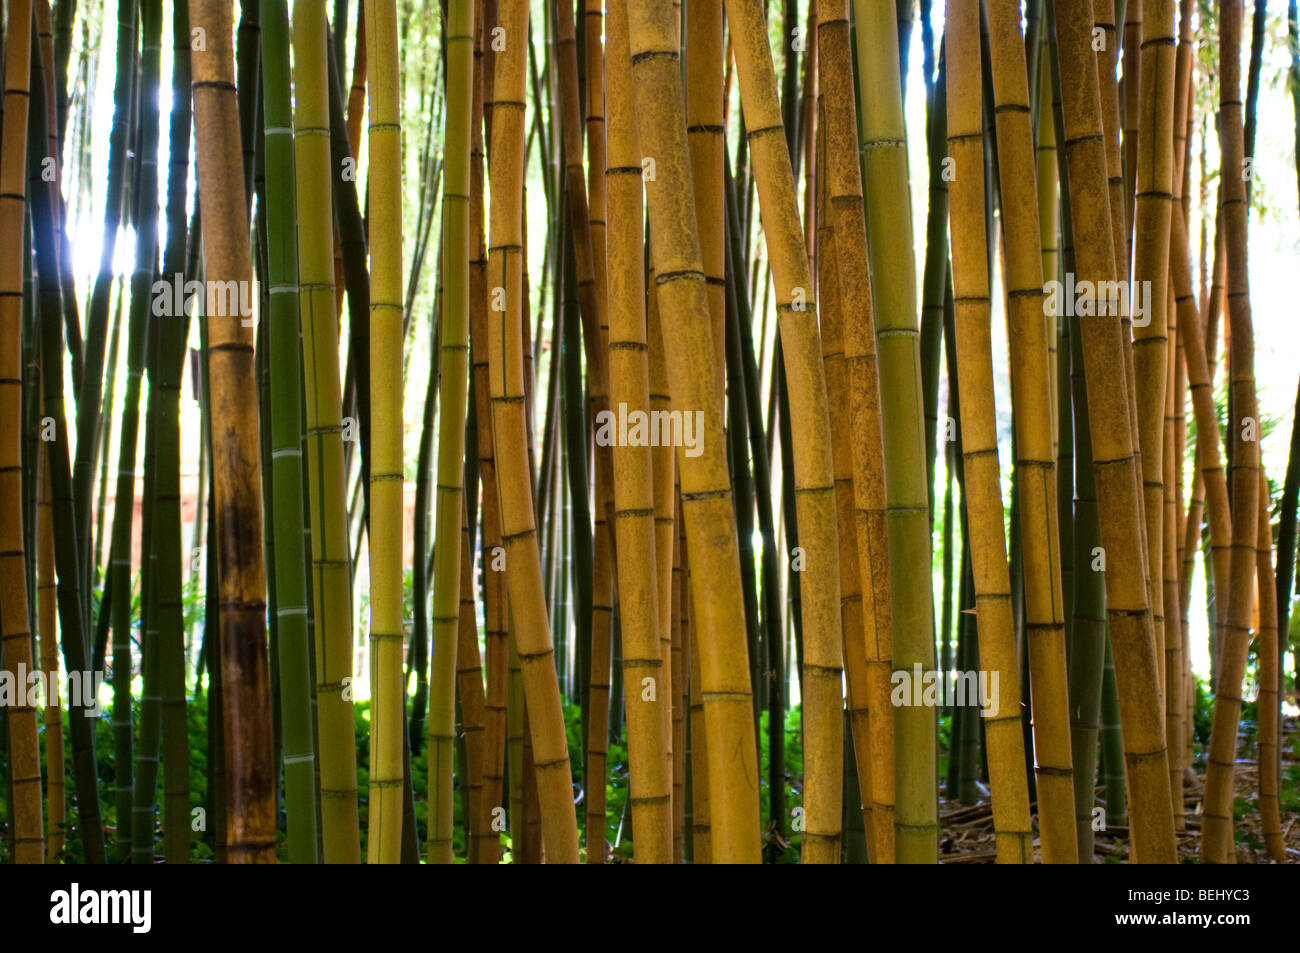 Bamboo garden, Bambouseraie de Prafrance near Anduze, France Stock Photo